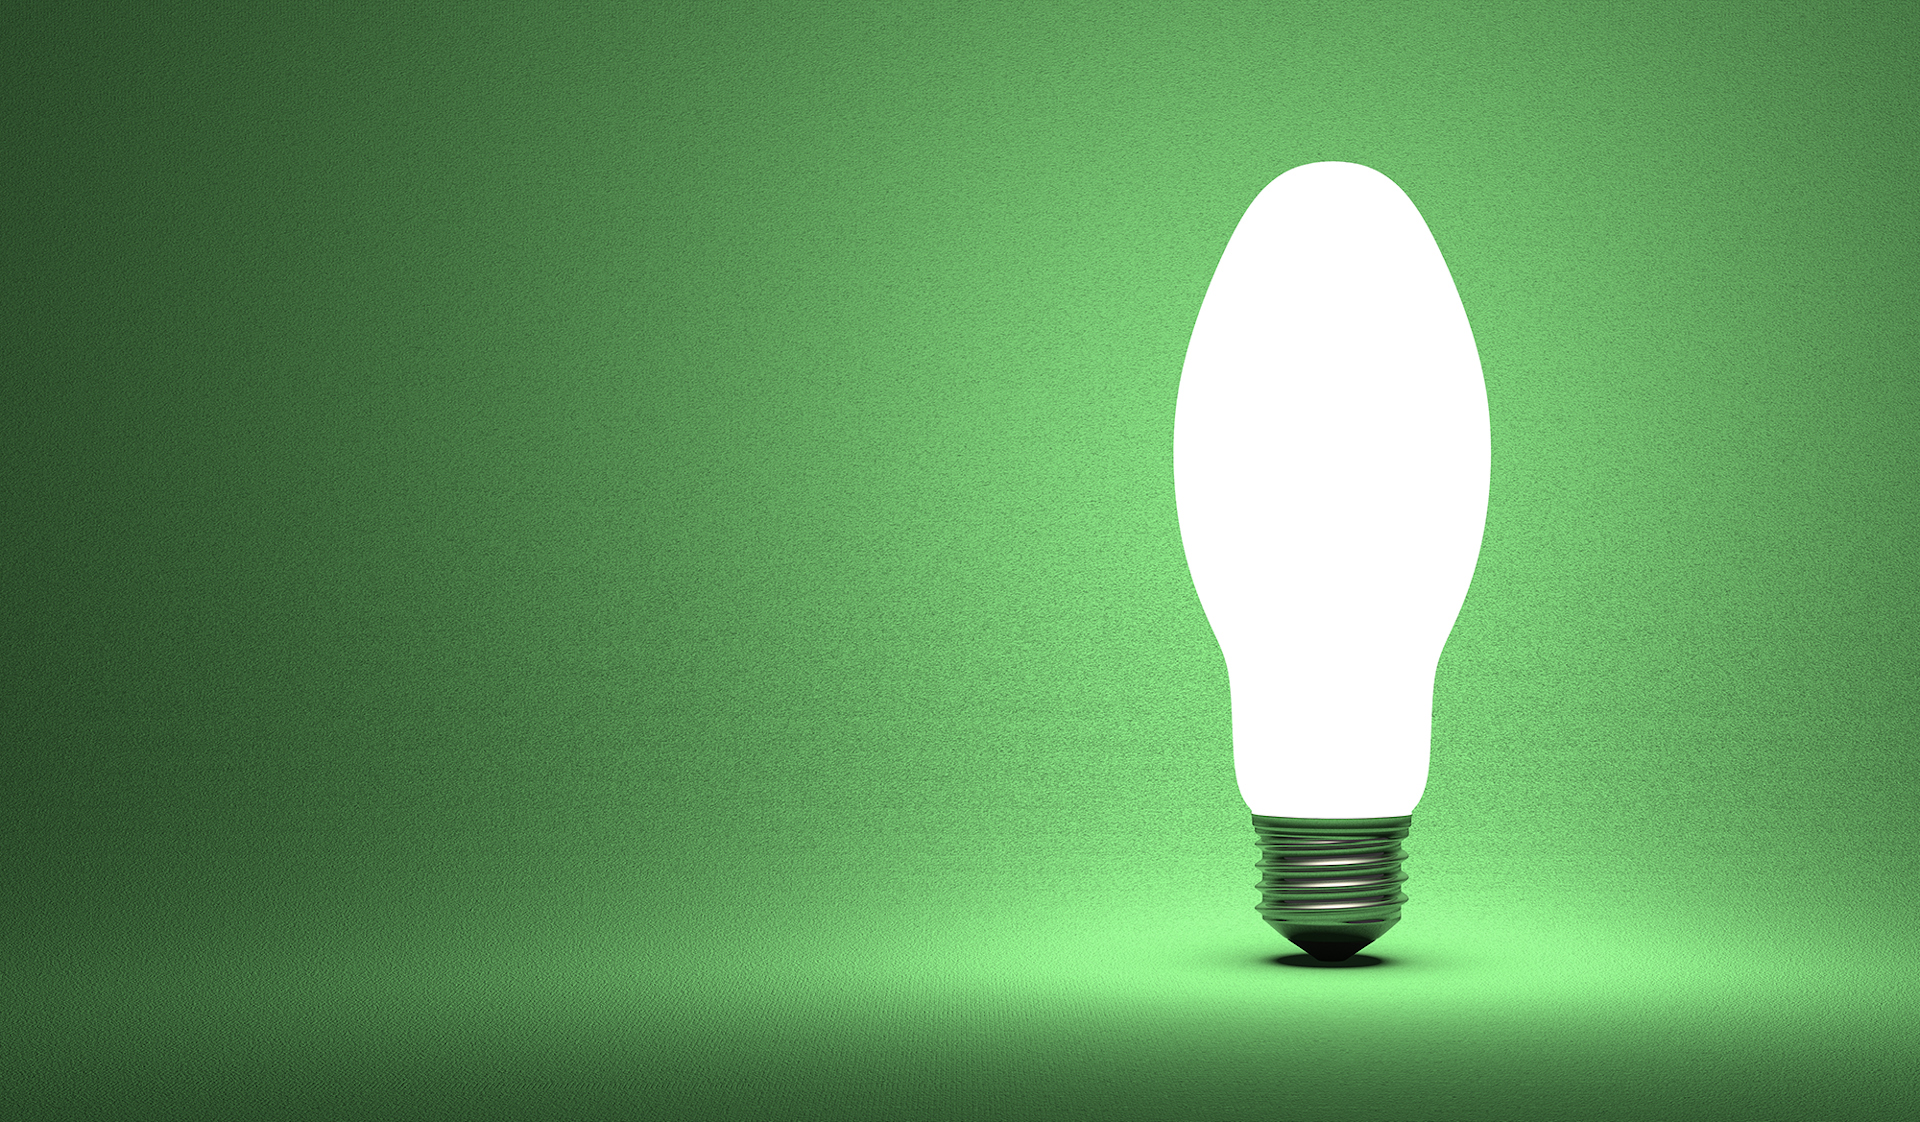 A lightbulb on a green background.